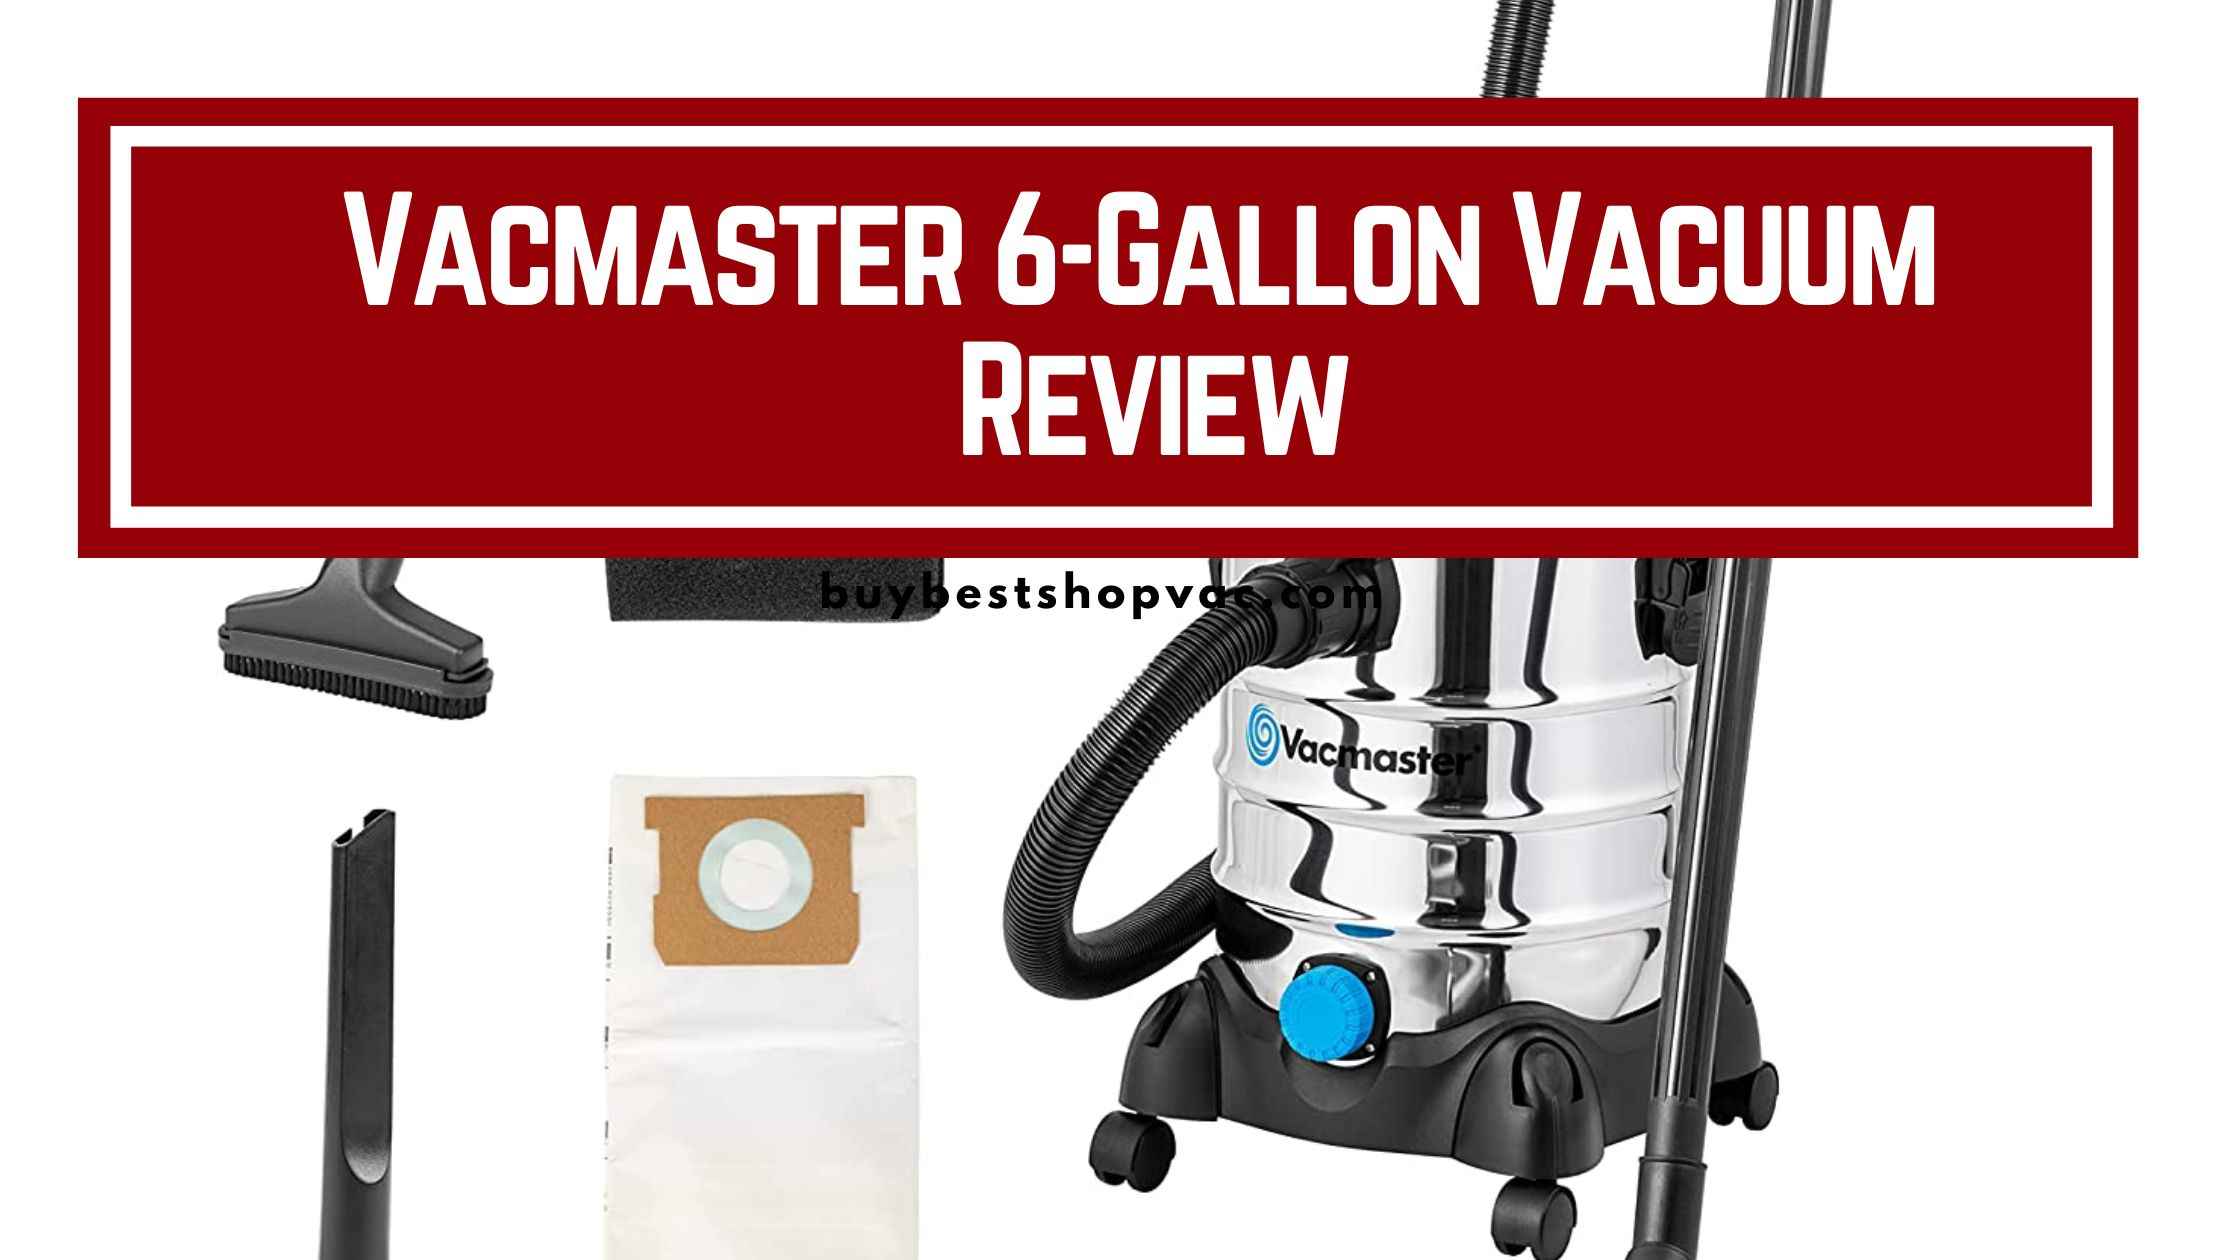 Vacmaster VQ607SFD 6-Gallon Wet/Dry Shop Vacuum Review